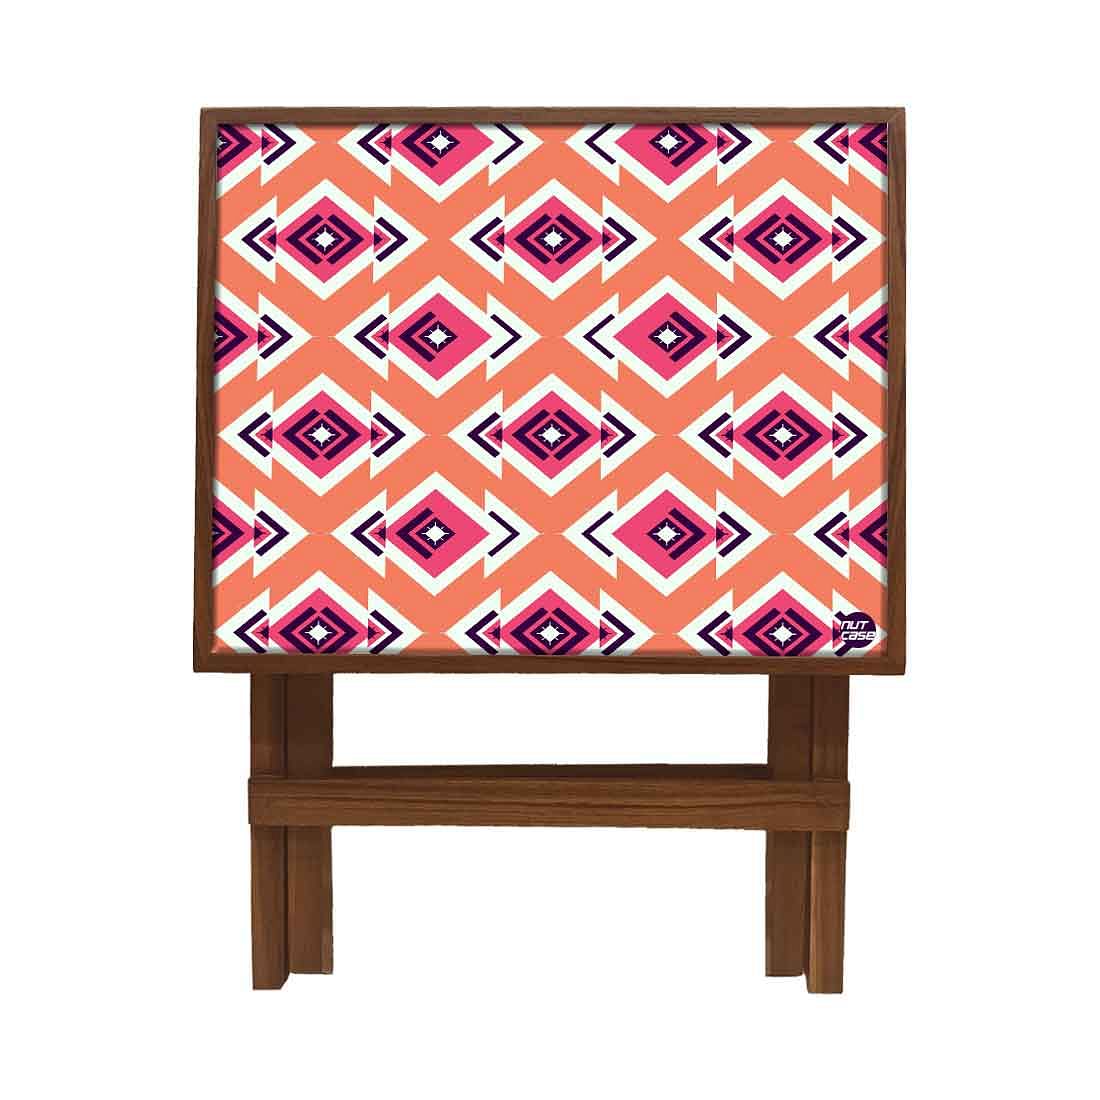 Folding Side Table - Teak Wood - Ethnic Pattern Nutcase